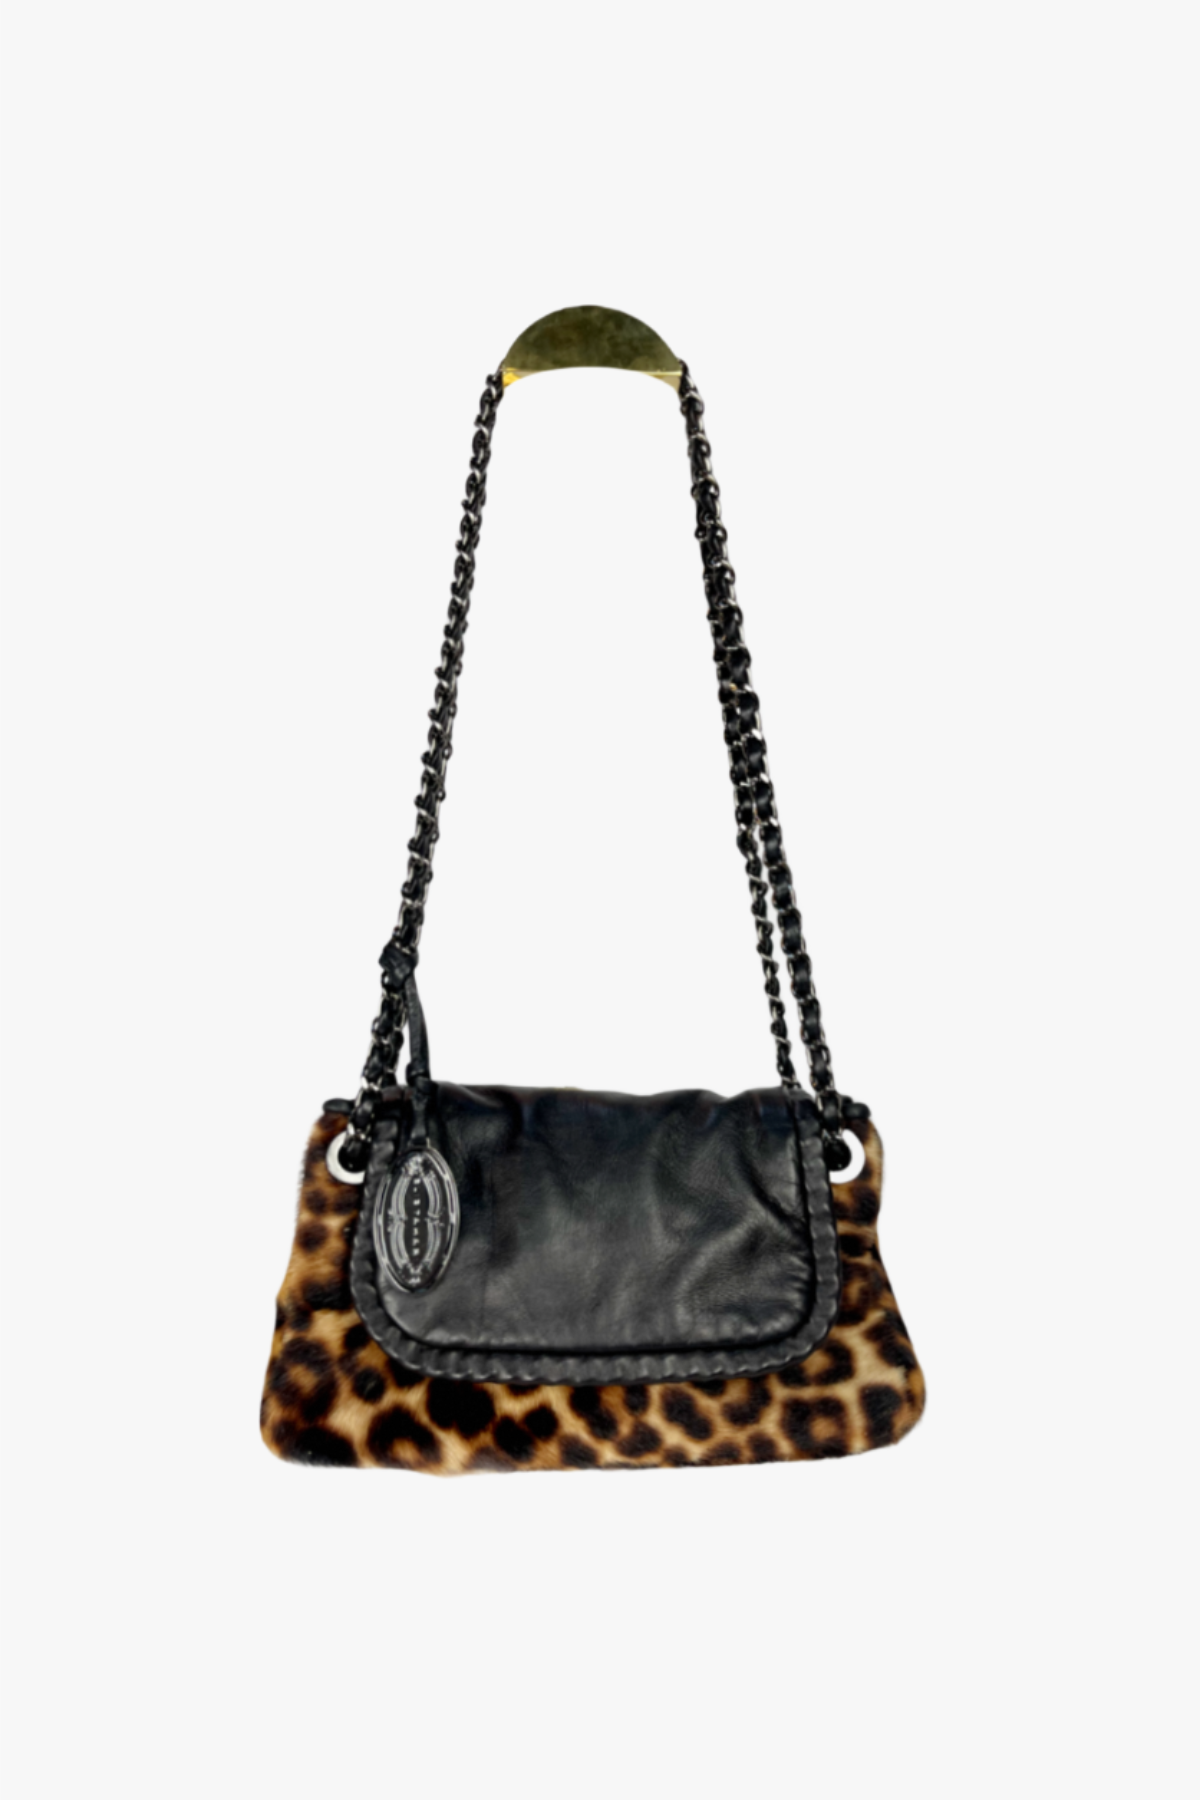 Elie Tahari 100% Calf Hair "Nina Mini" Leopard Print Chain Shoulder Bag NWT